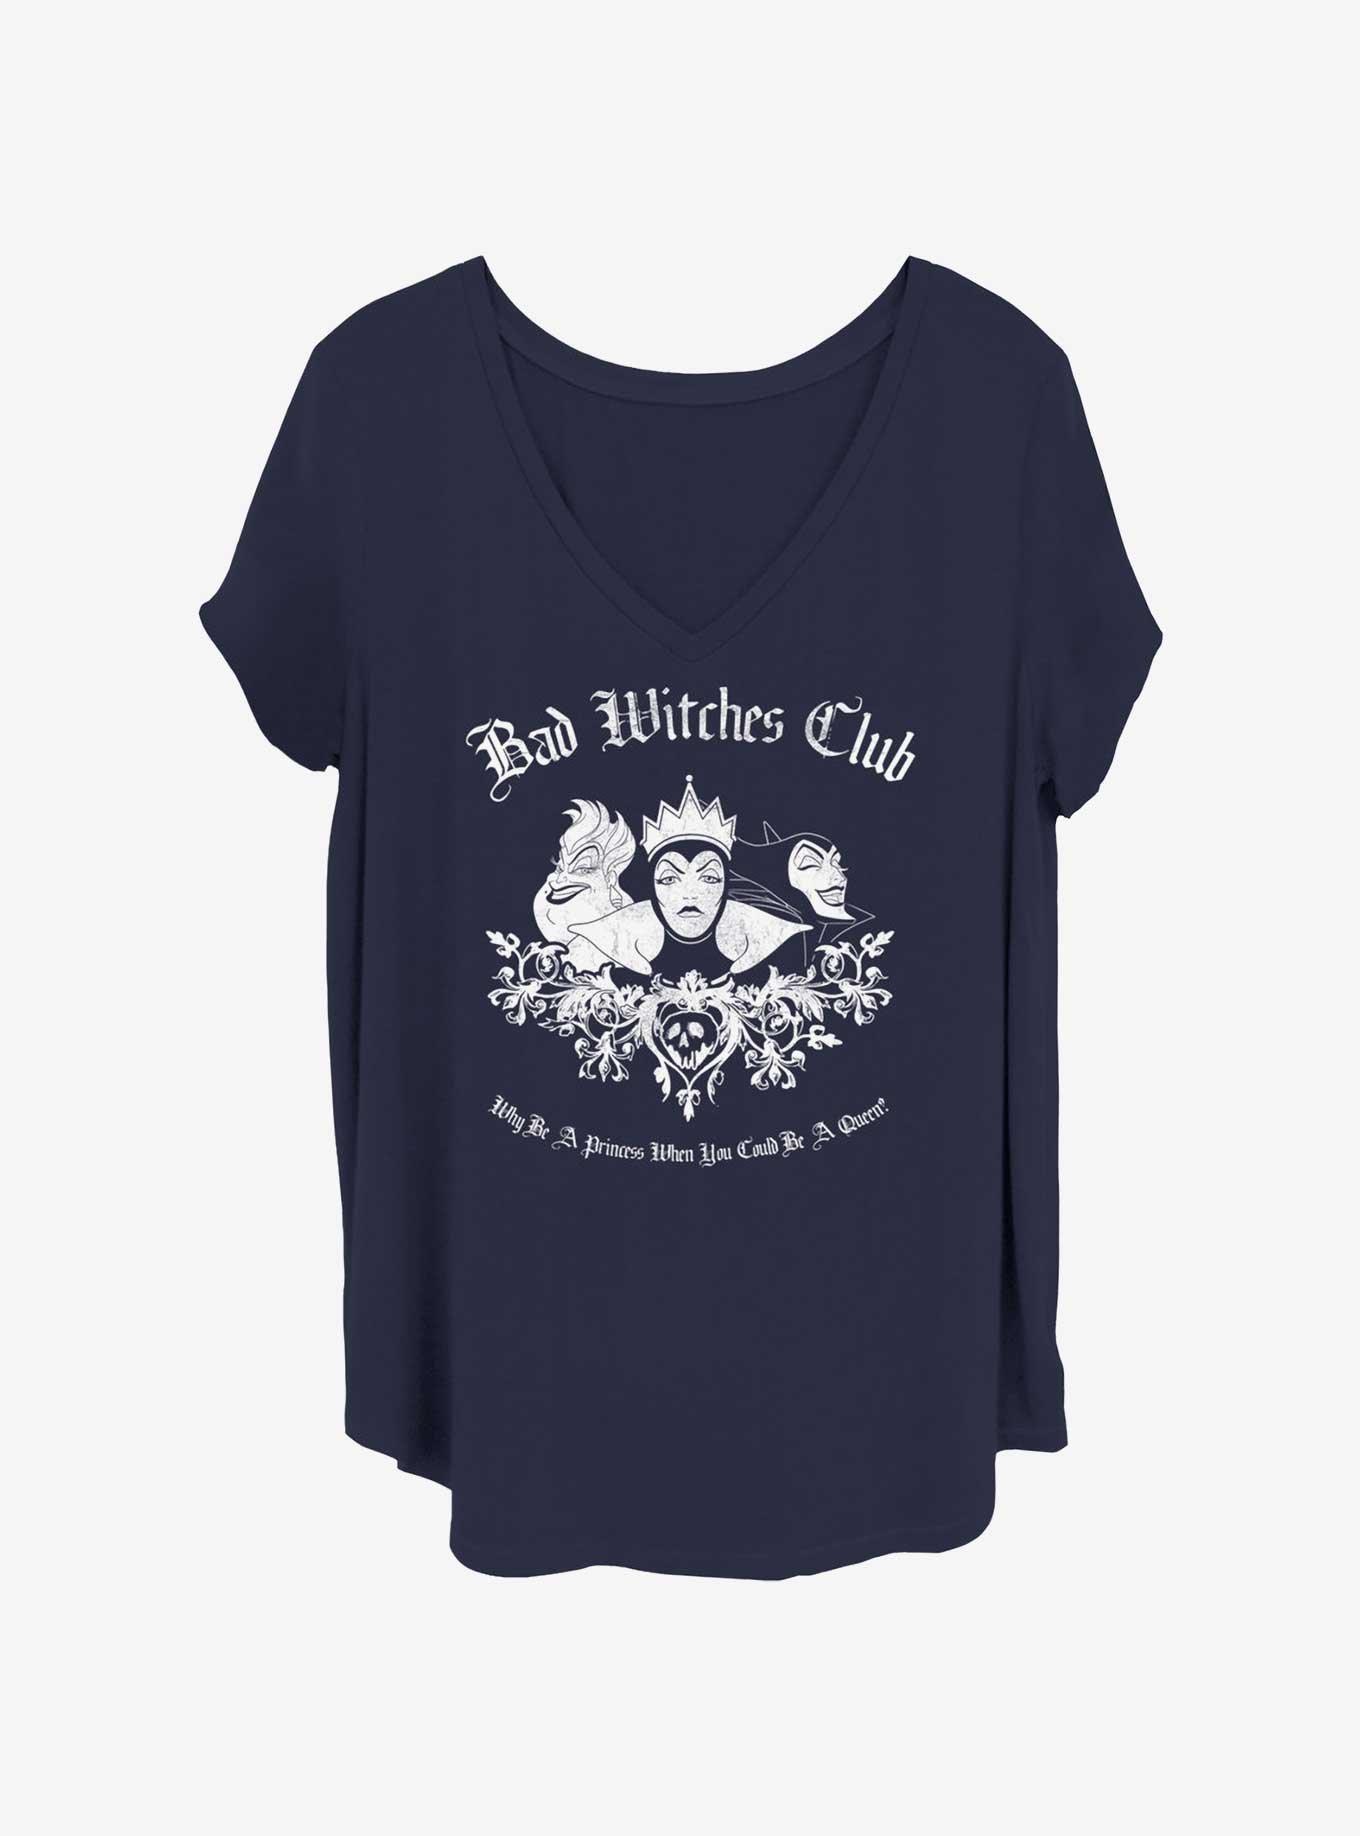 pendul Hobart elev Disney Villains Bad Witch Club Girls T-Shirt Plus Size - BLUE | Hot Topic